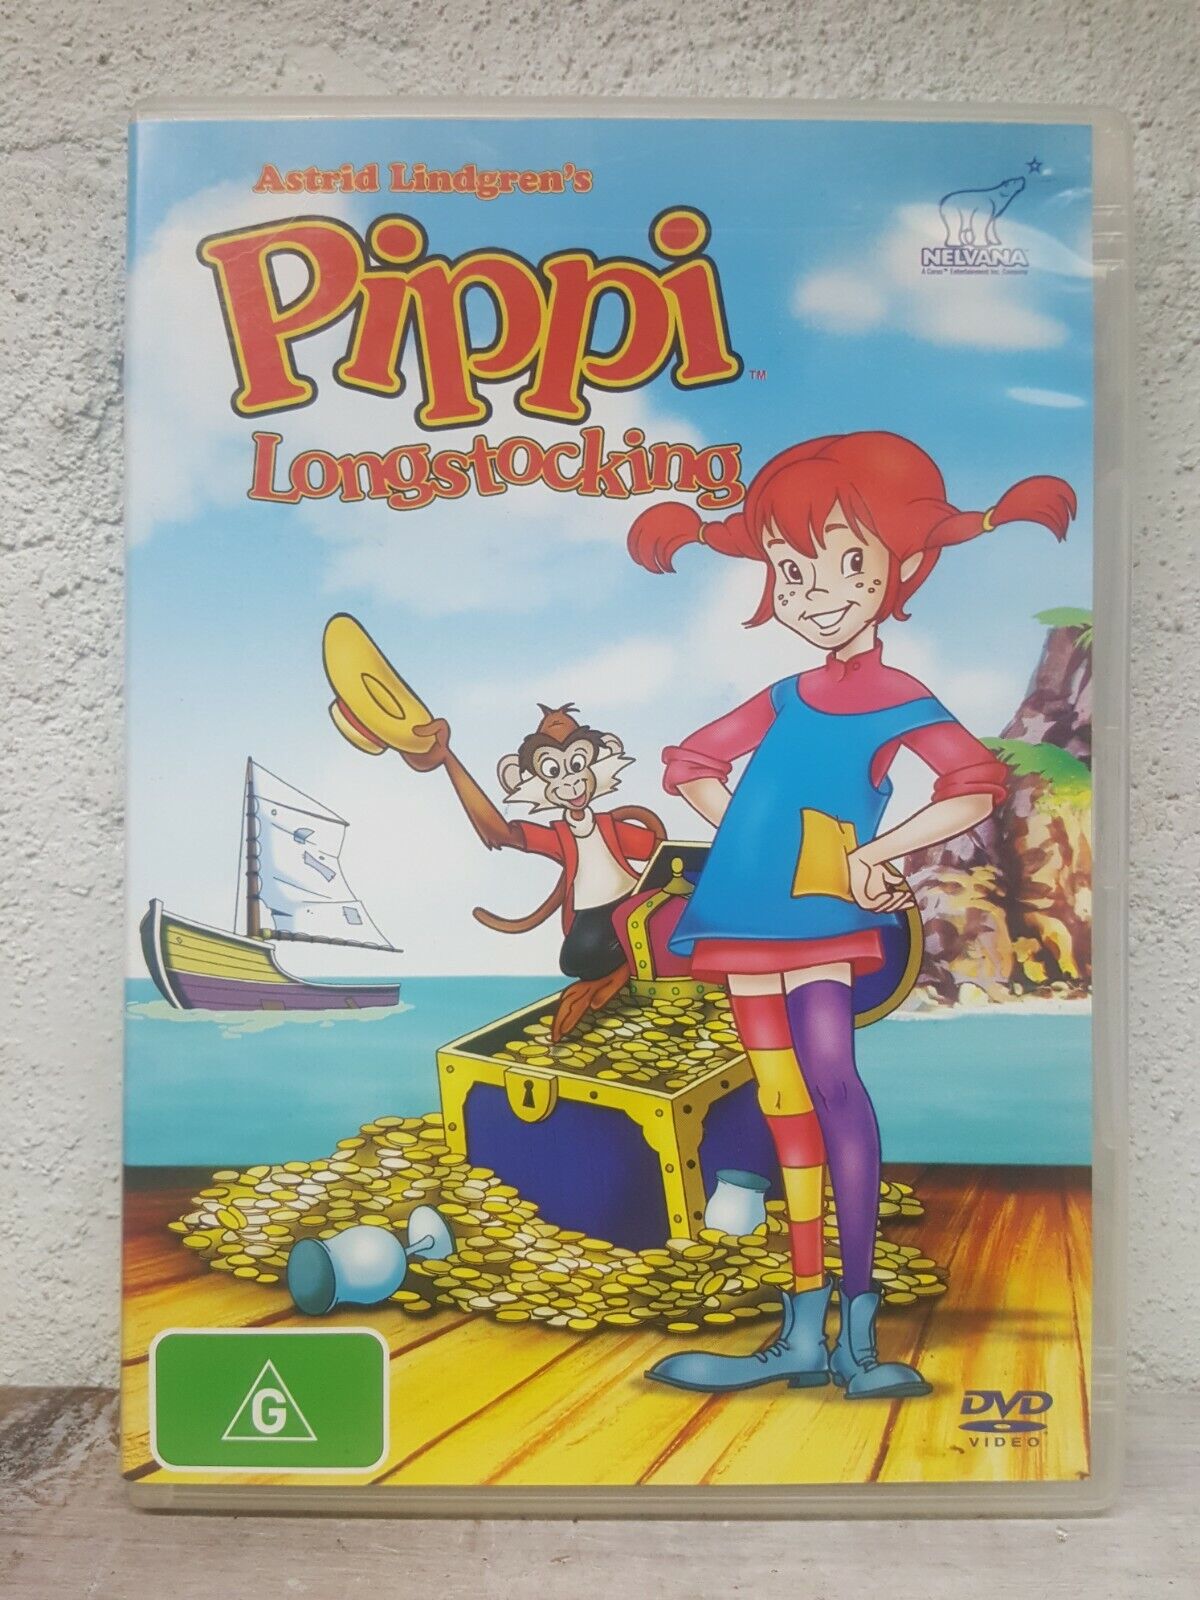 Best of Pippi longstockings cartoon movie